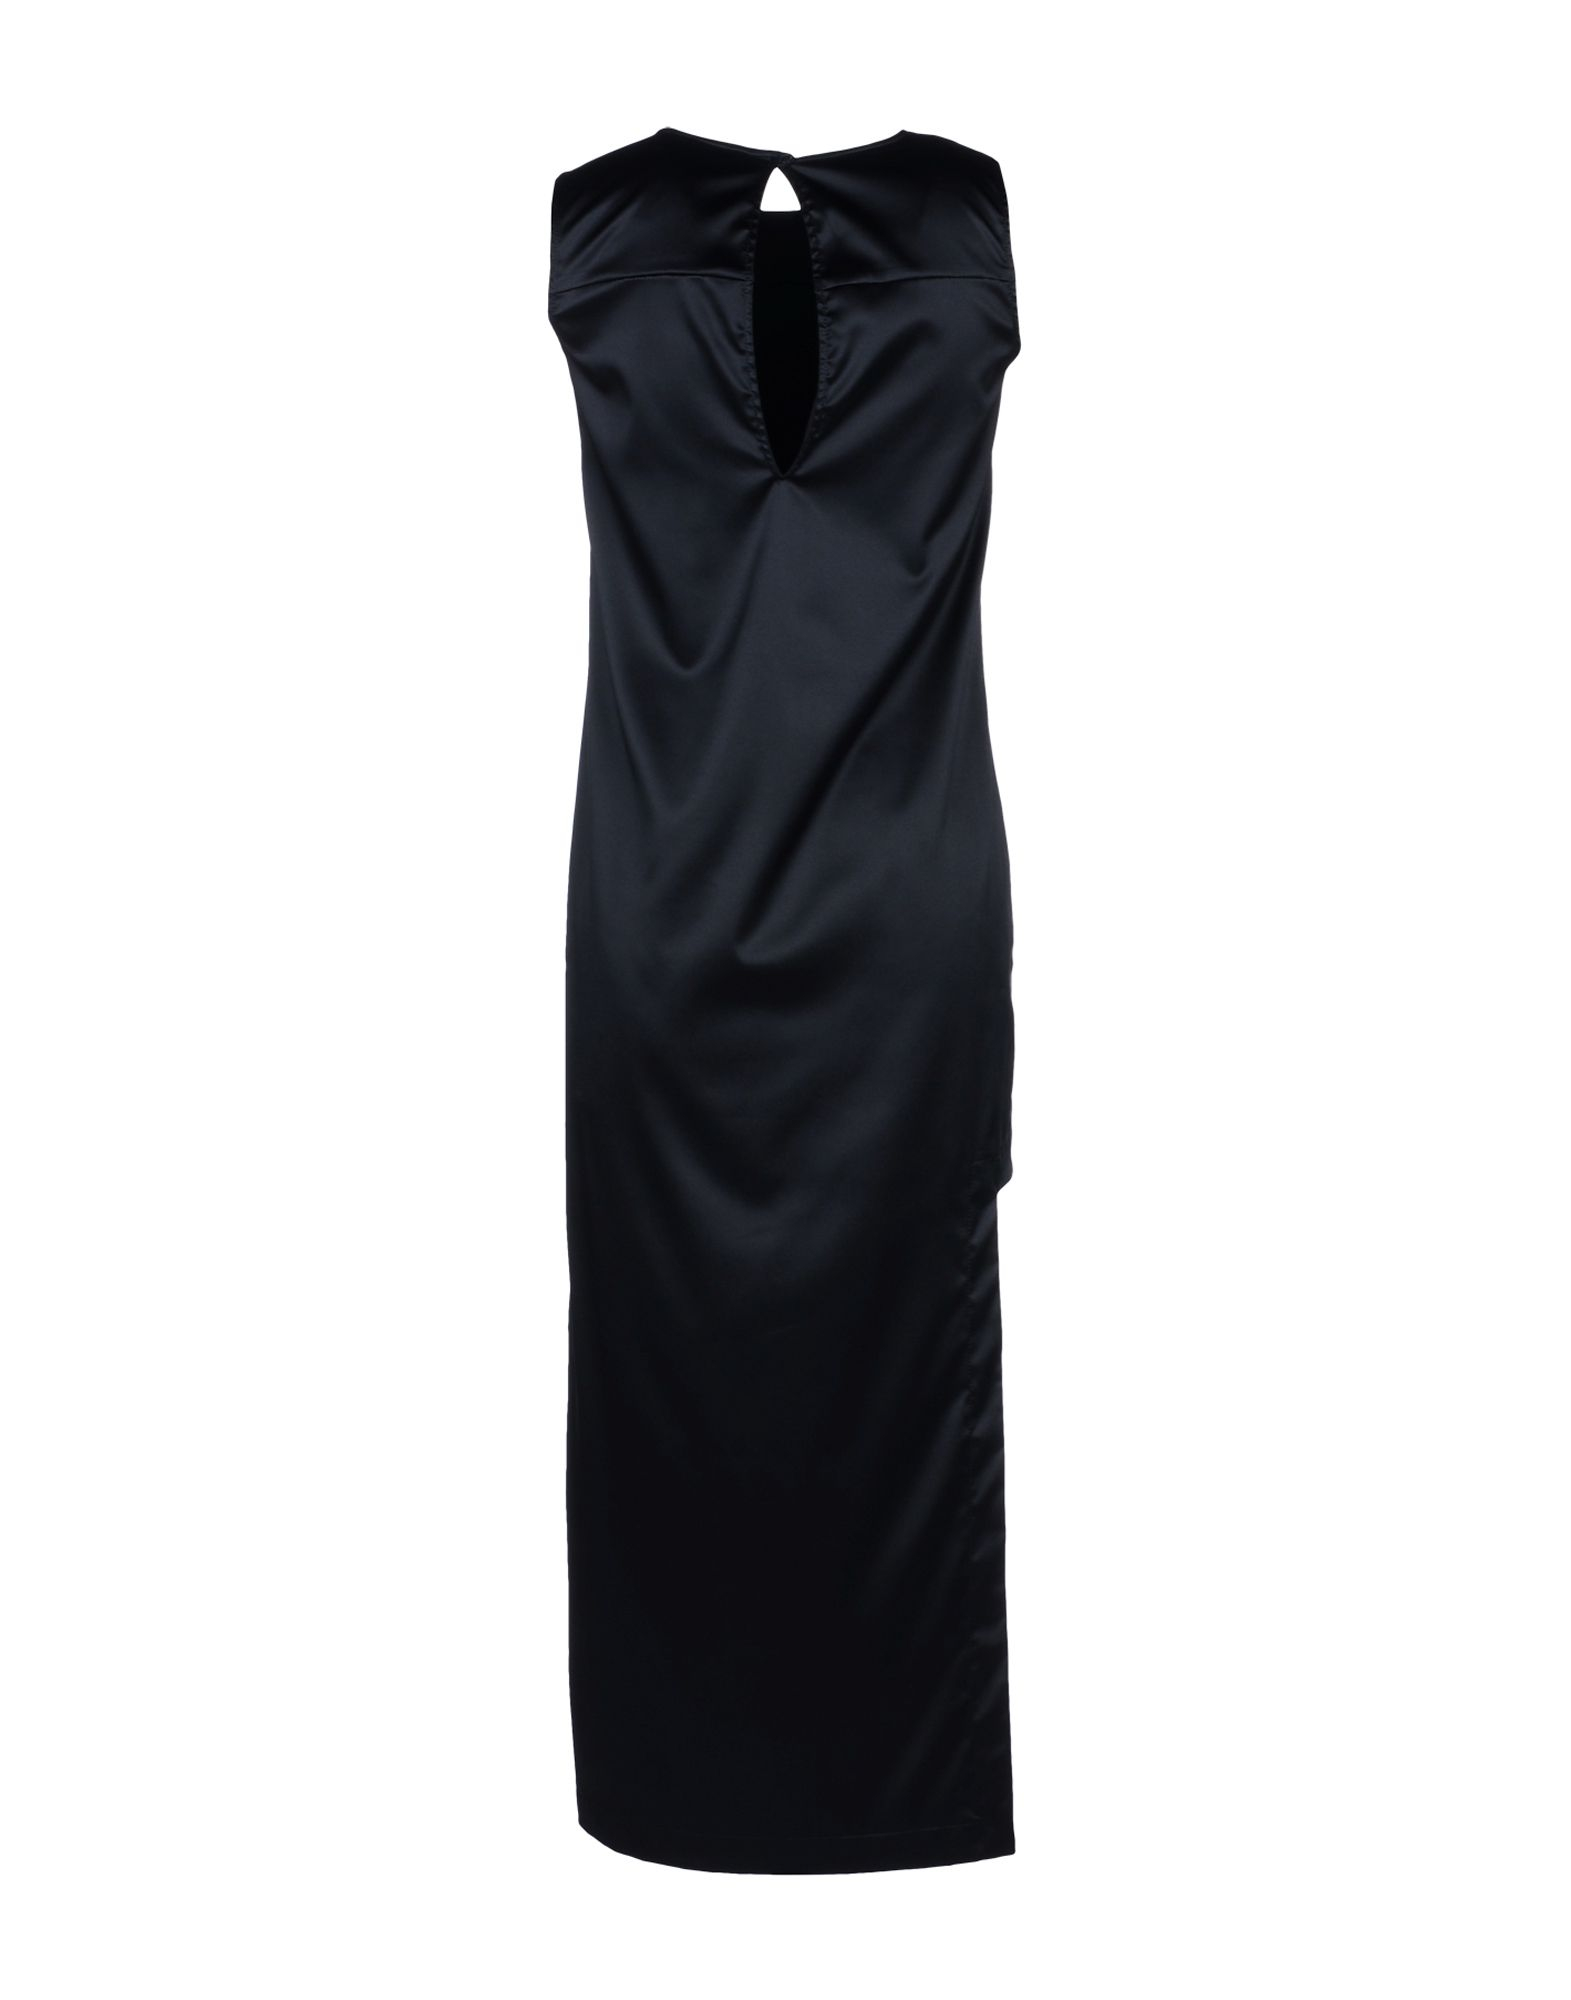 Adele Fado | Black 3/4 Length Dress | Lyst